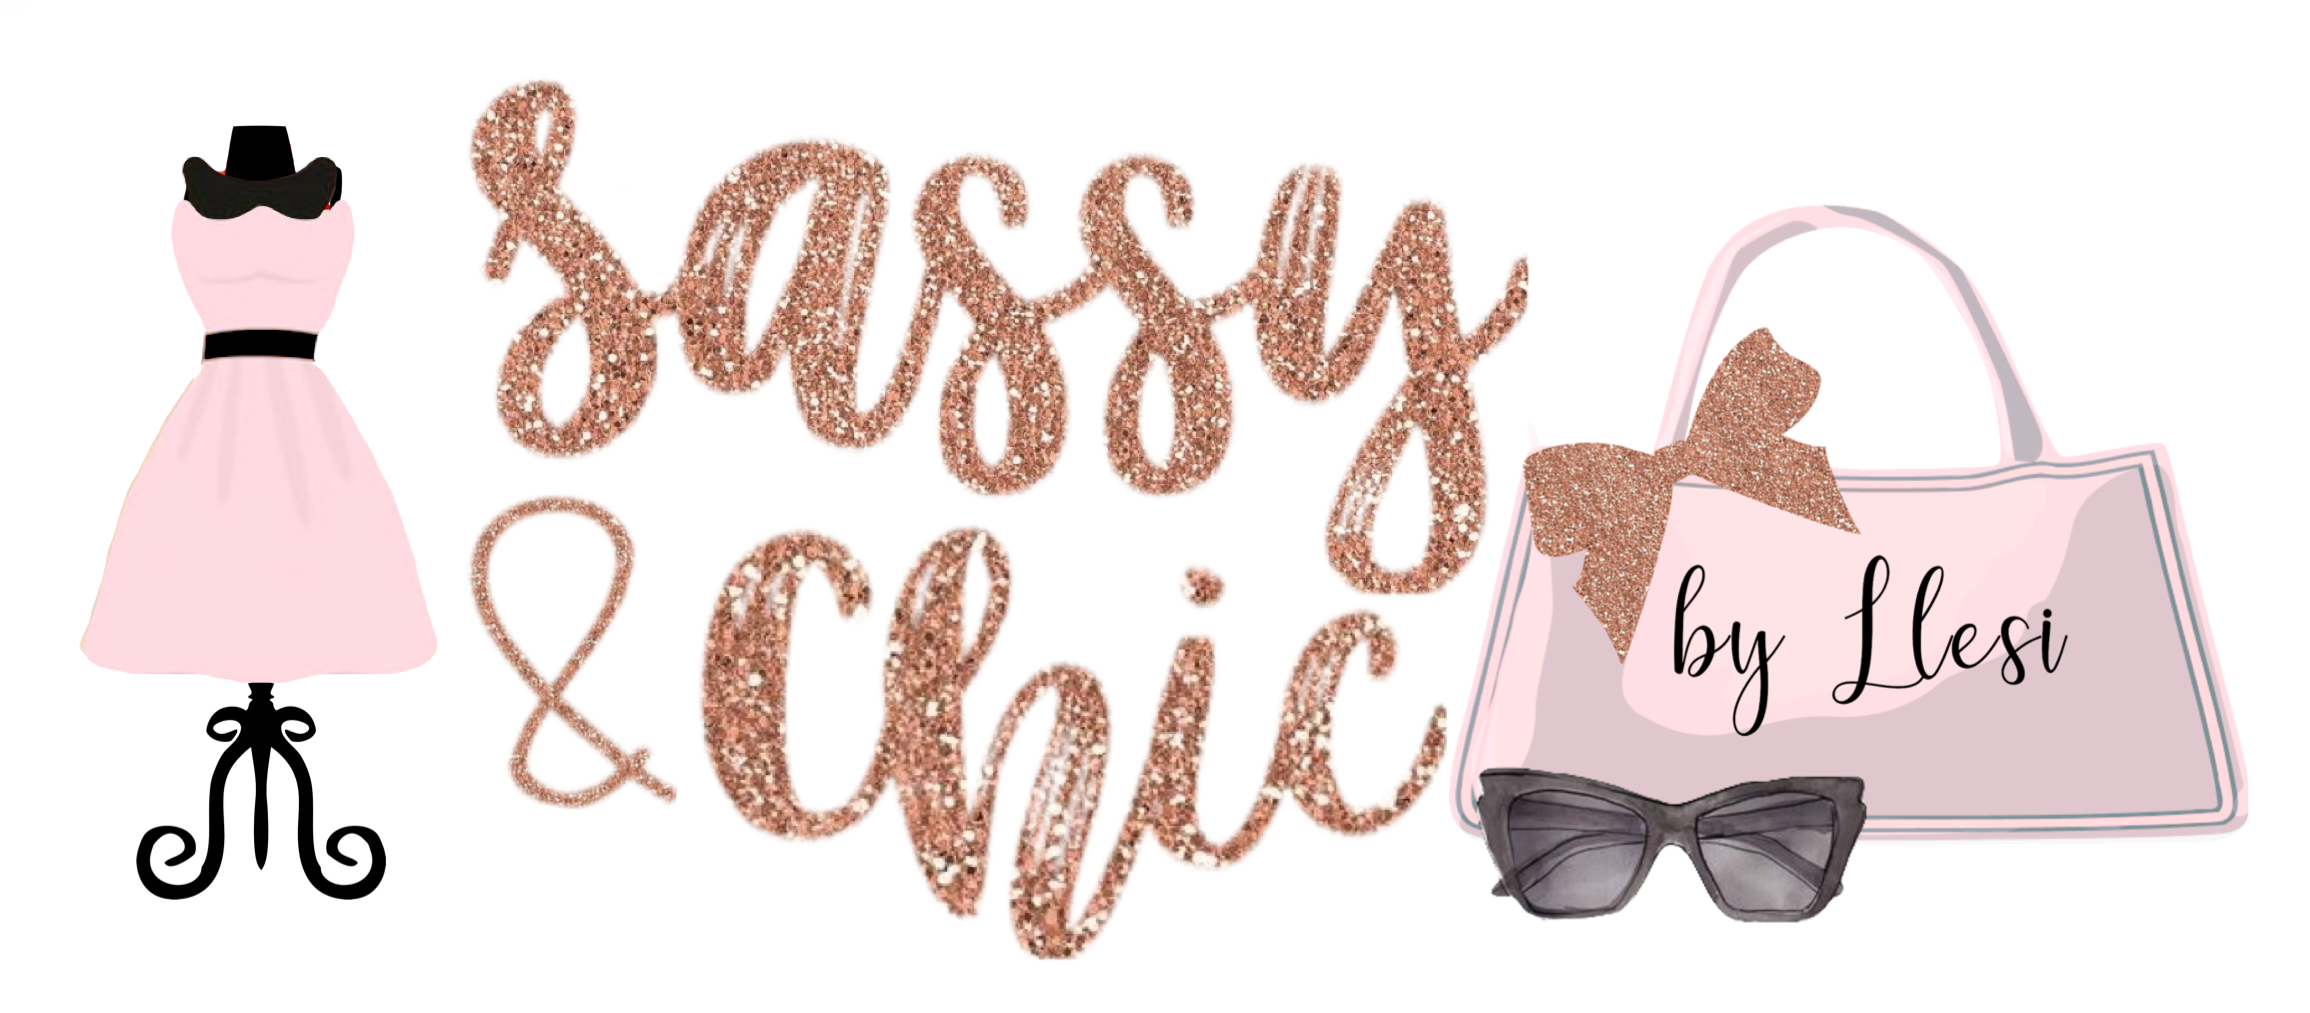 The Sassy 2.0 – Sideline Originals